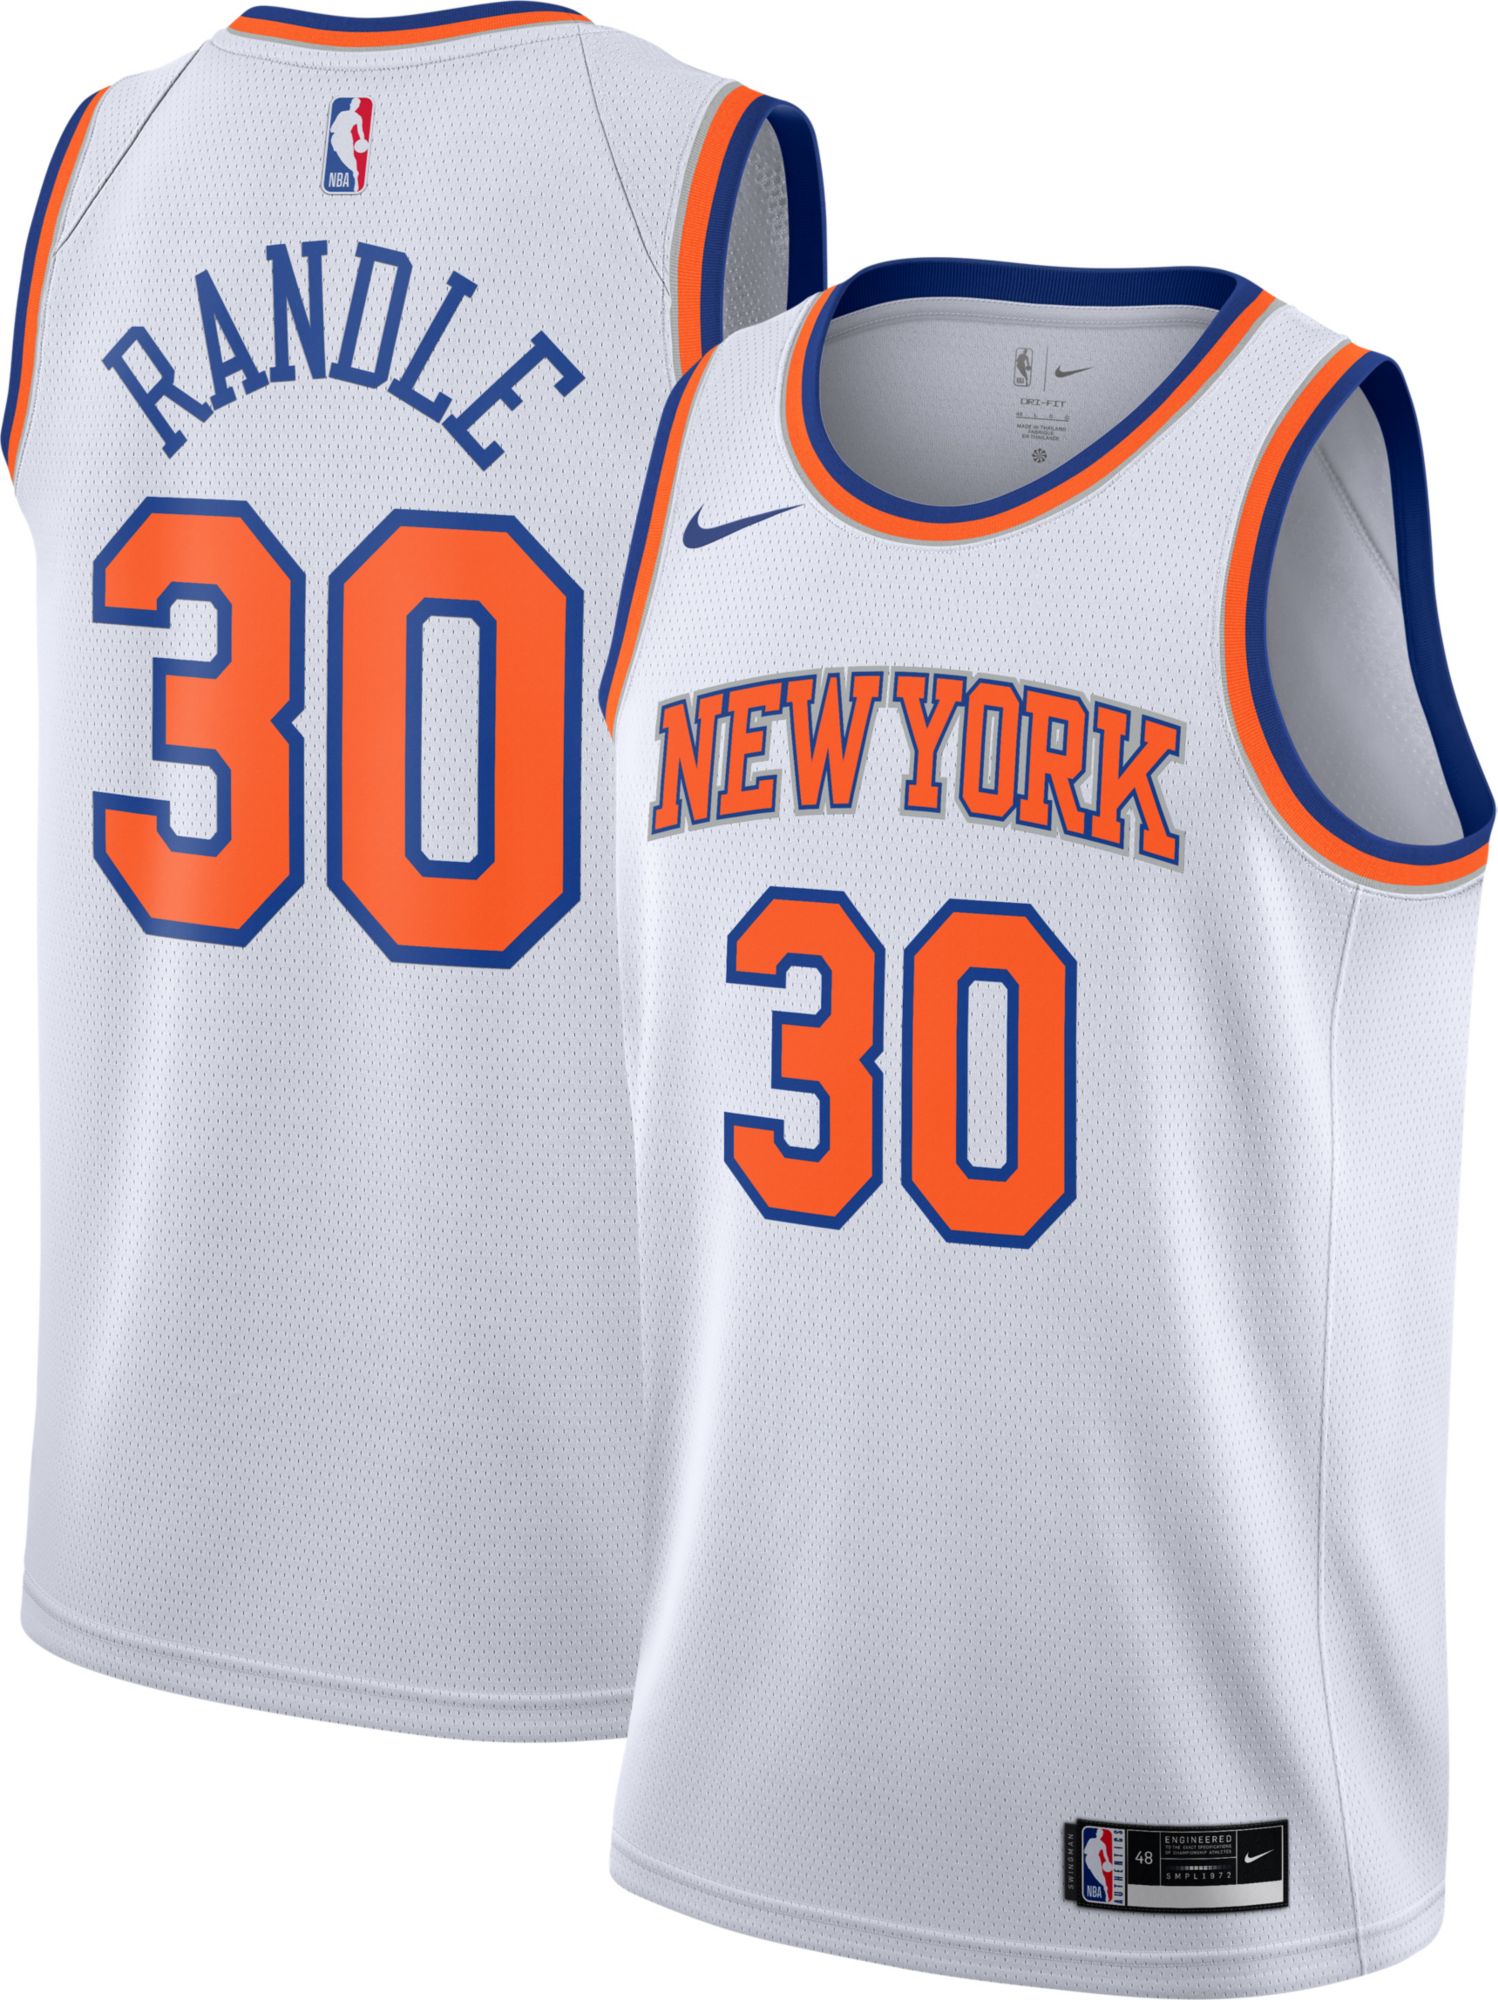 New York Knicks Spotlight Men's Nike Dri-FIT NBA Pullover Hoodie